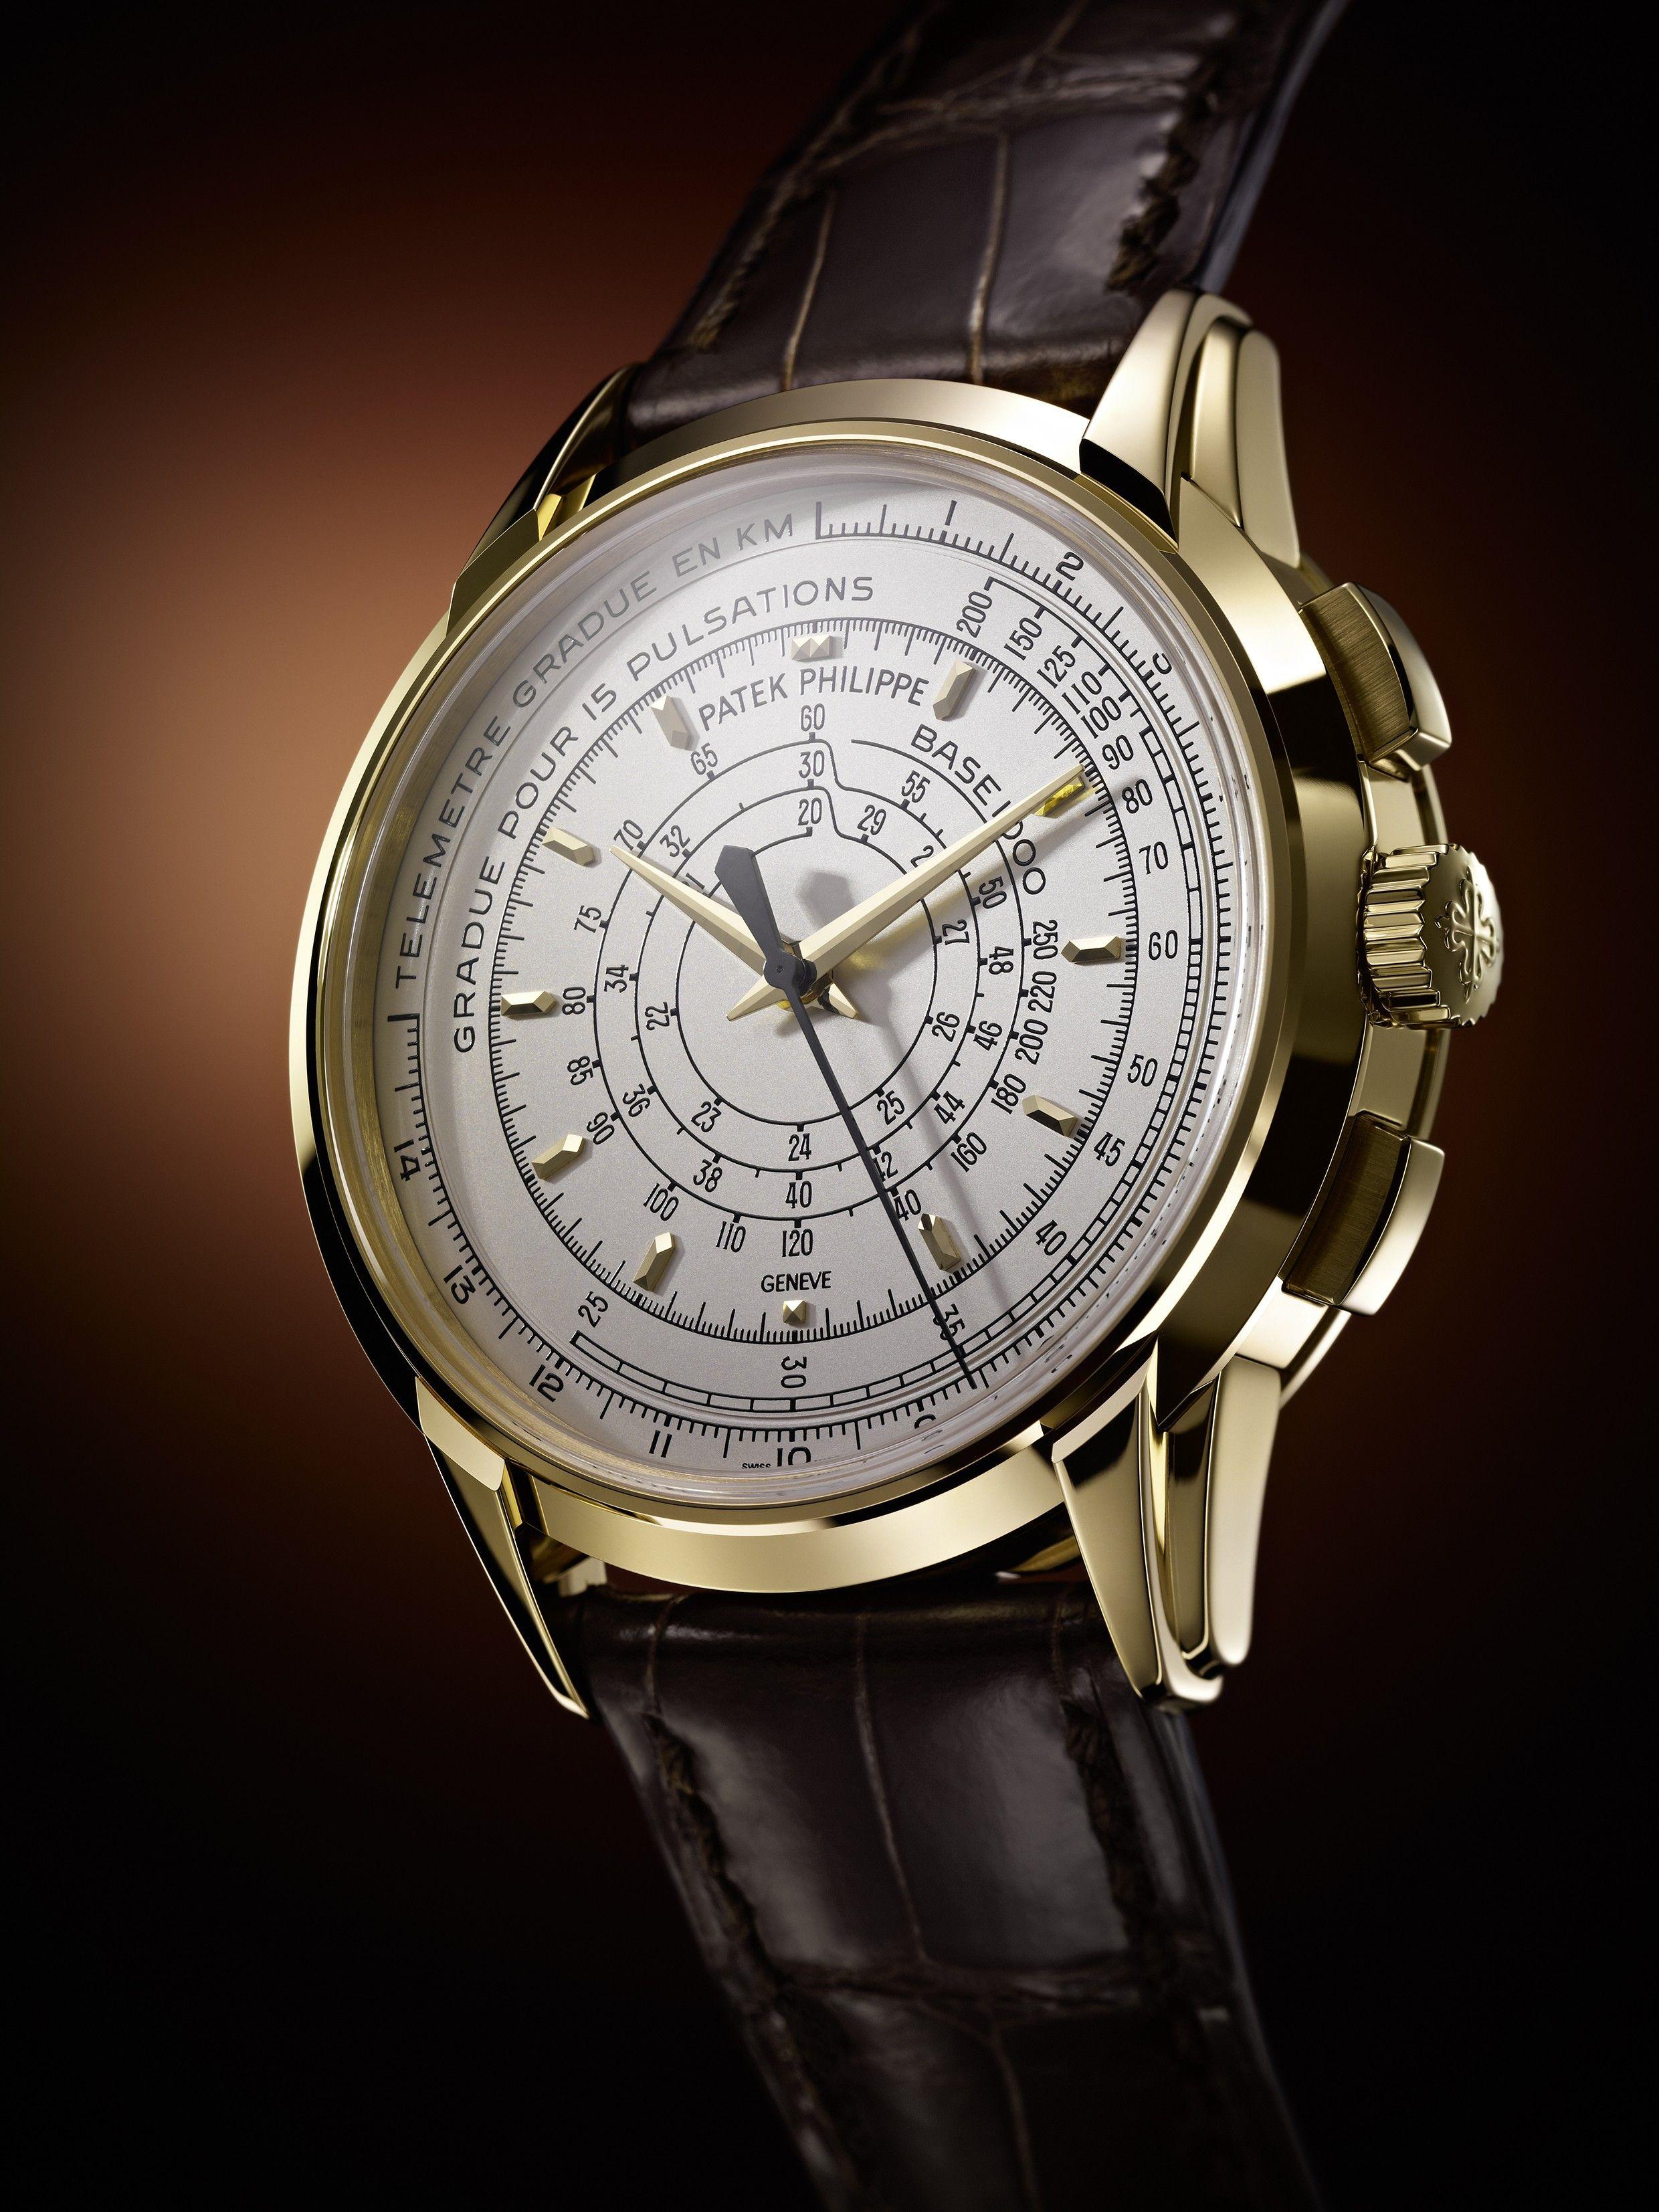 Download the Patek Philippe Watch Wallpaper, Patek Philippe Watch